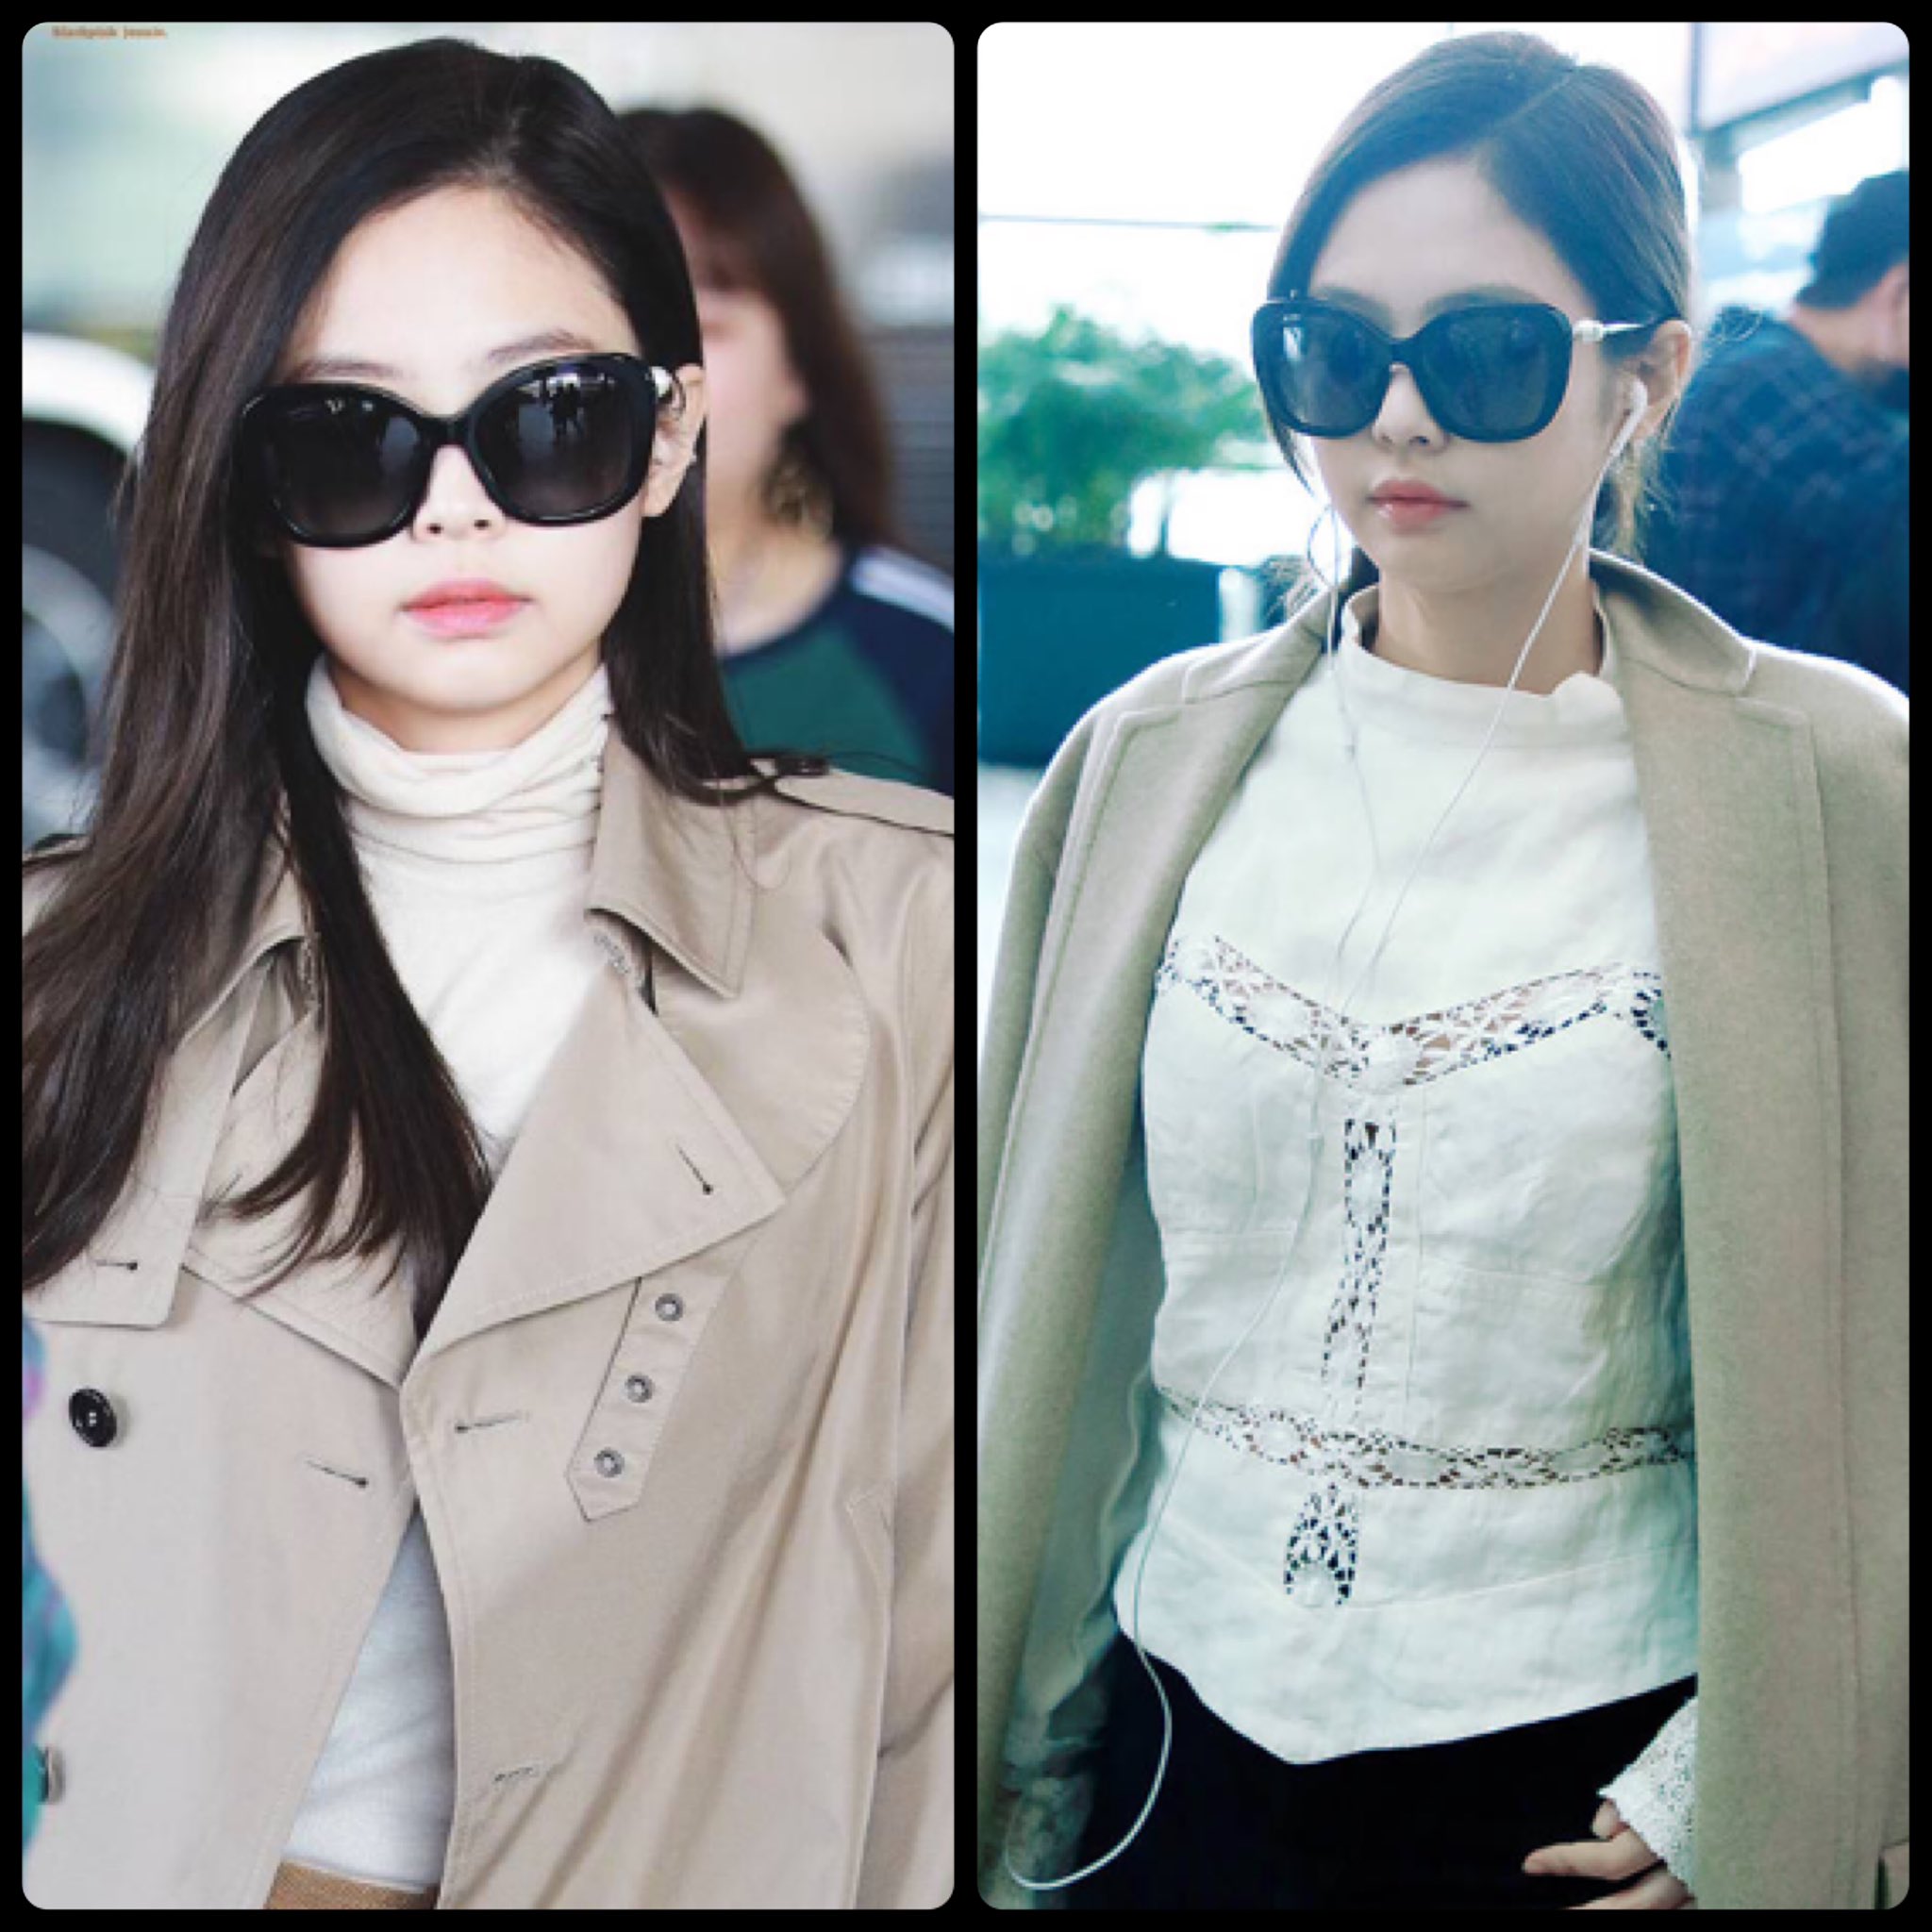 JENNIEKIMJENNIE on X: Collections of Jennie wearing sunglasses